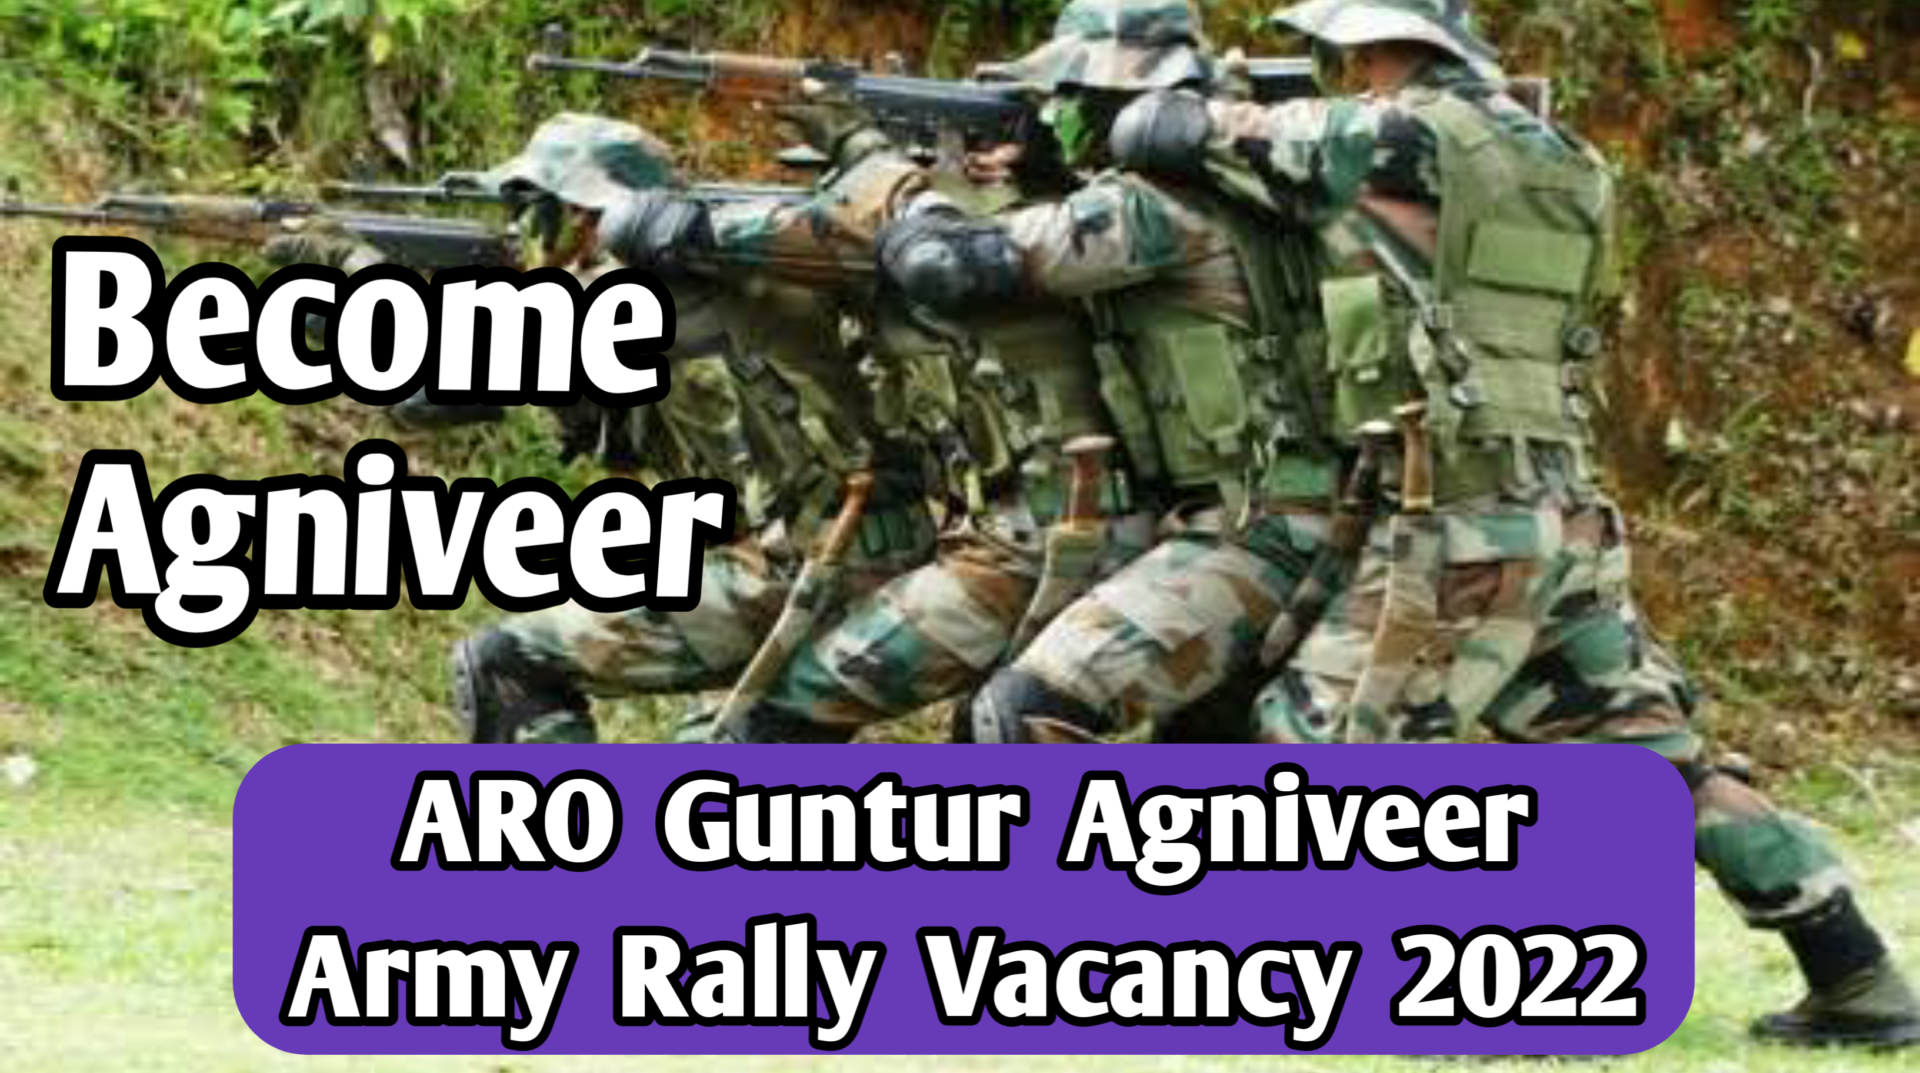 ARO Guntur Agniveer Army Rally Vacancy 2022